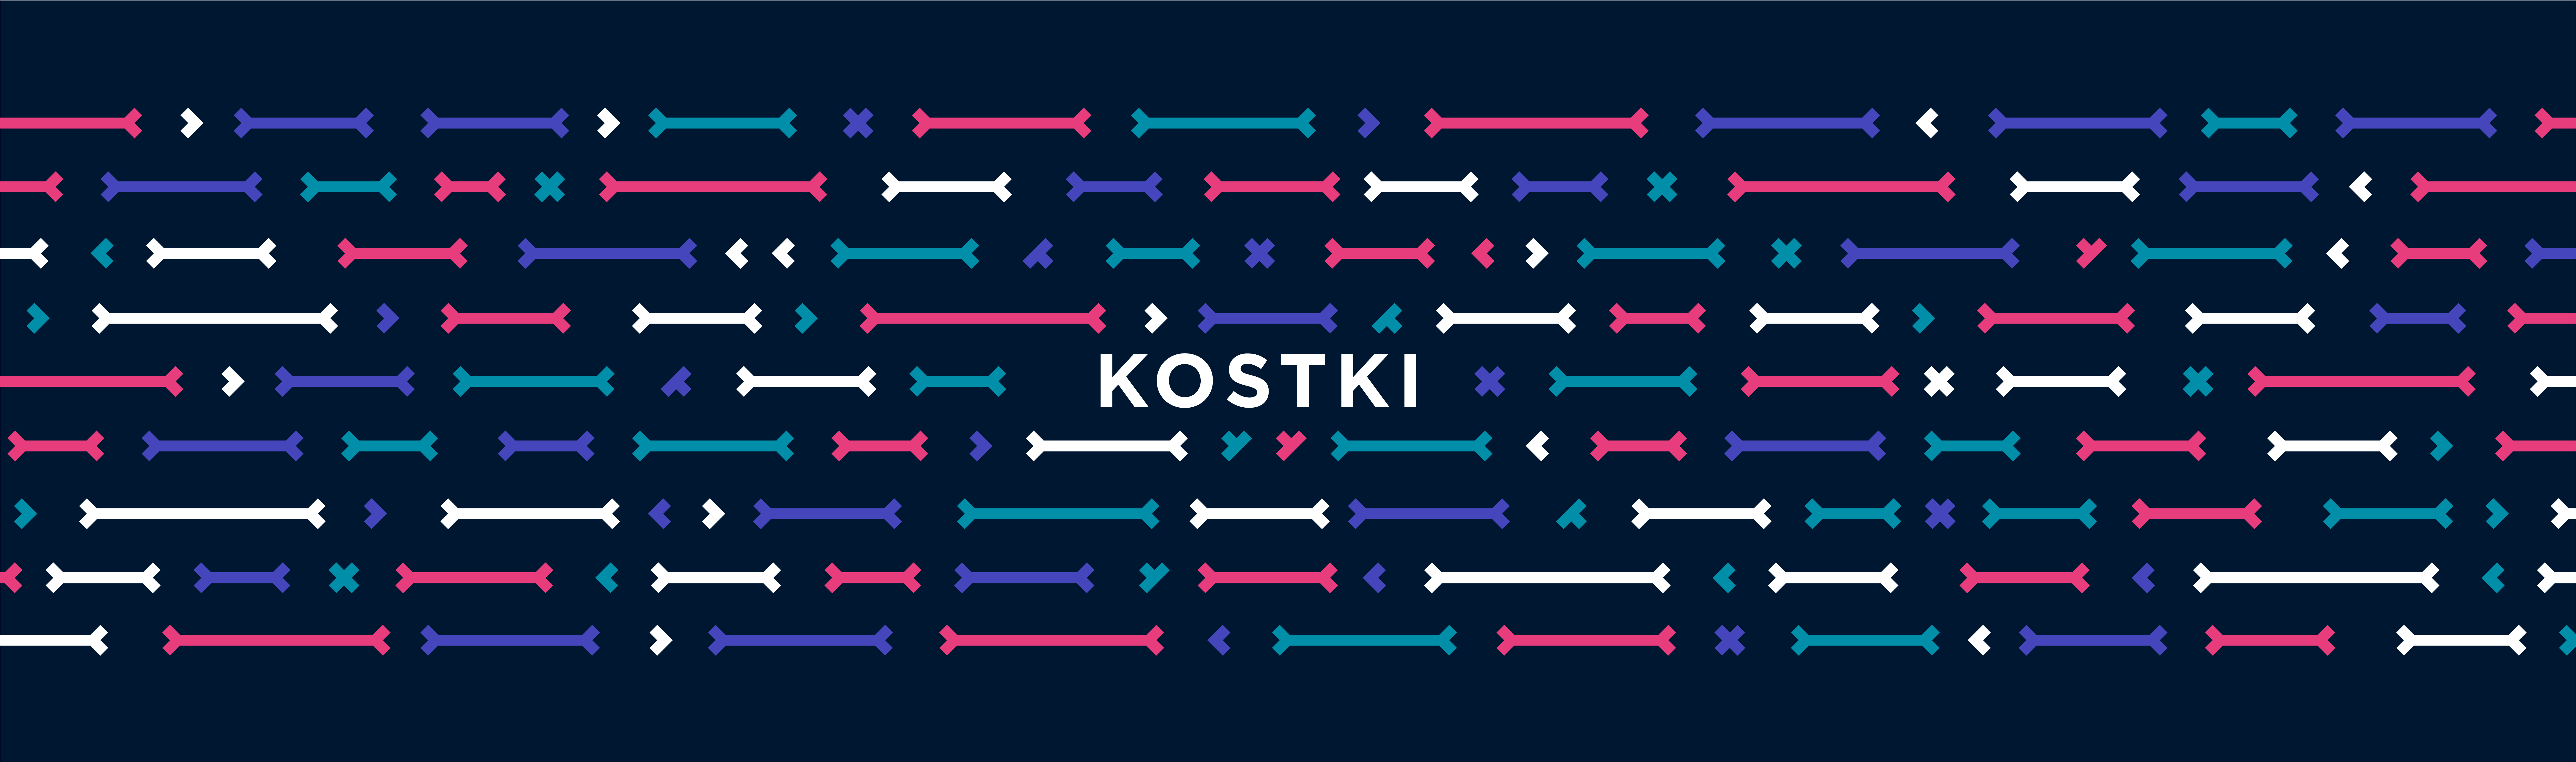 Kostki (Deprecated) - website kept for archive reasons